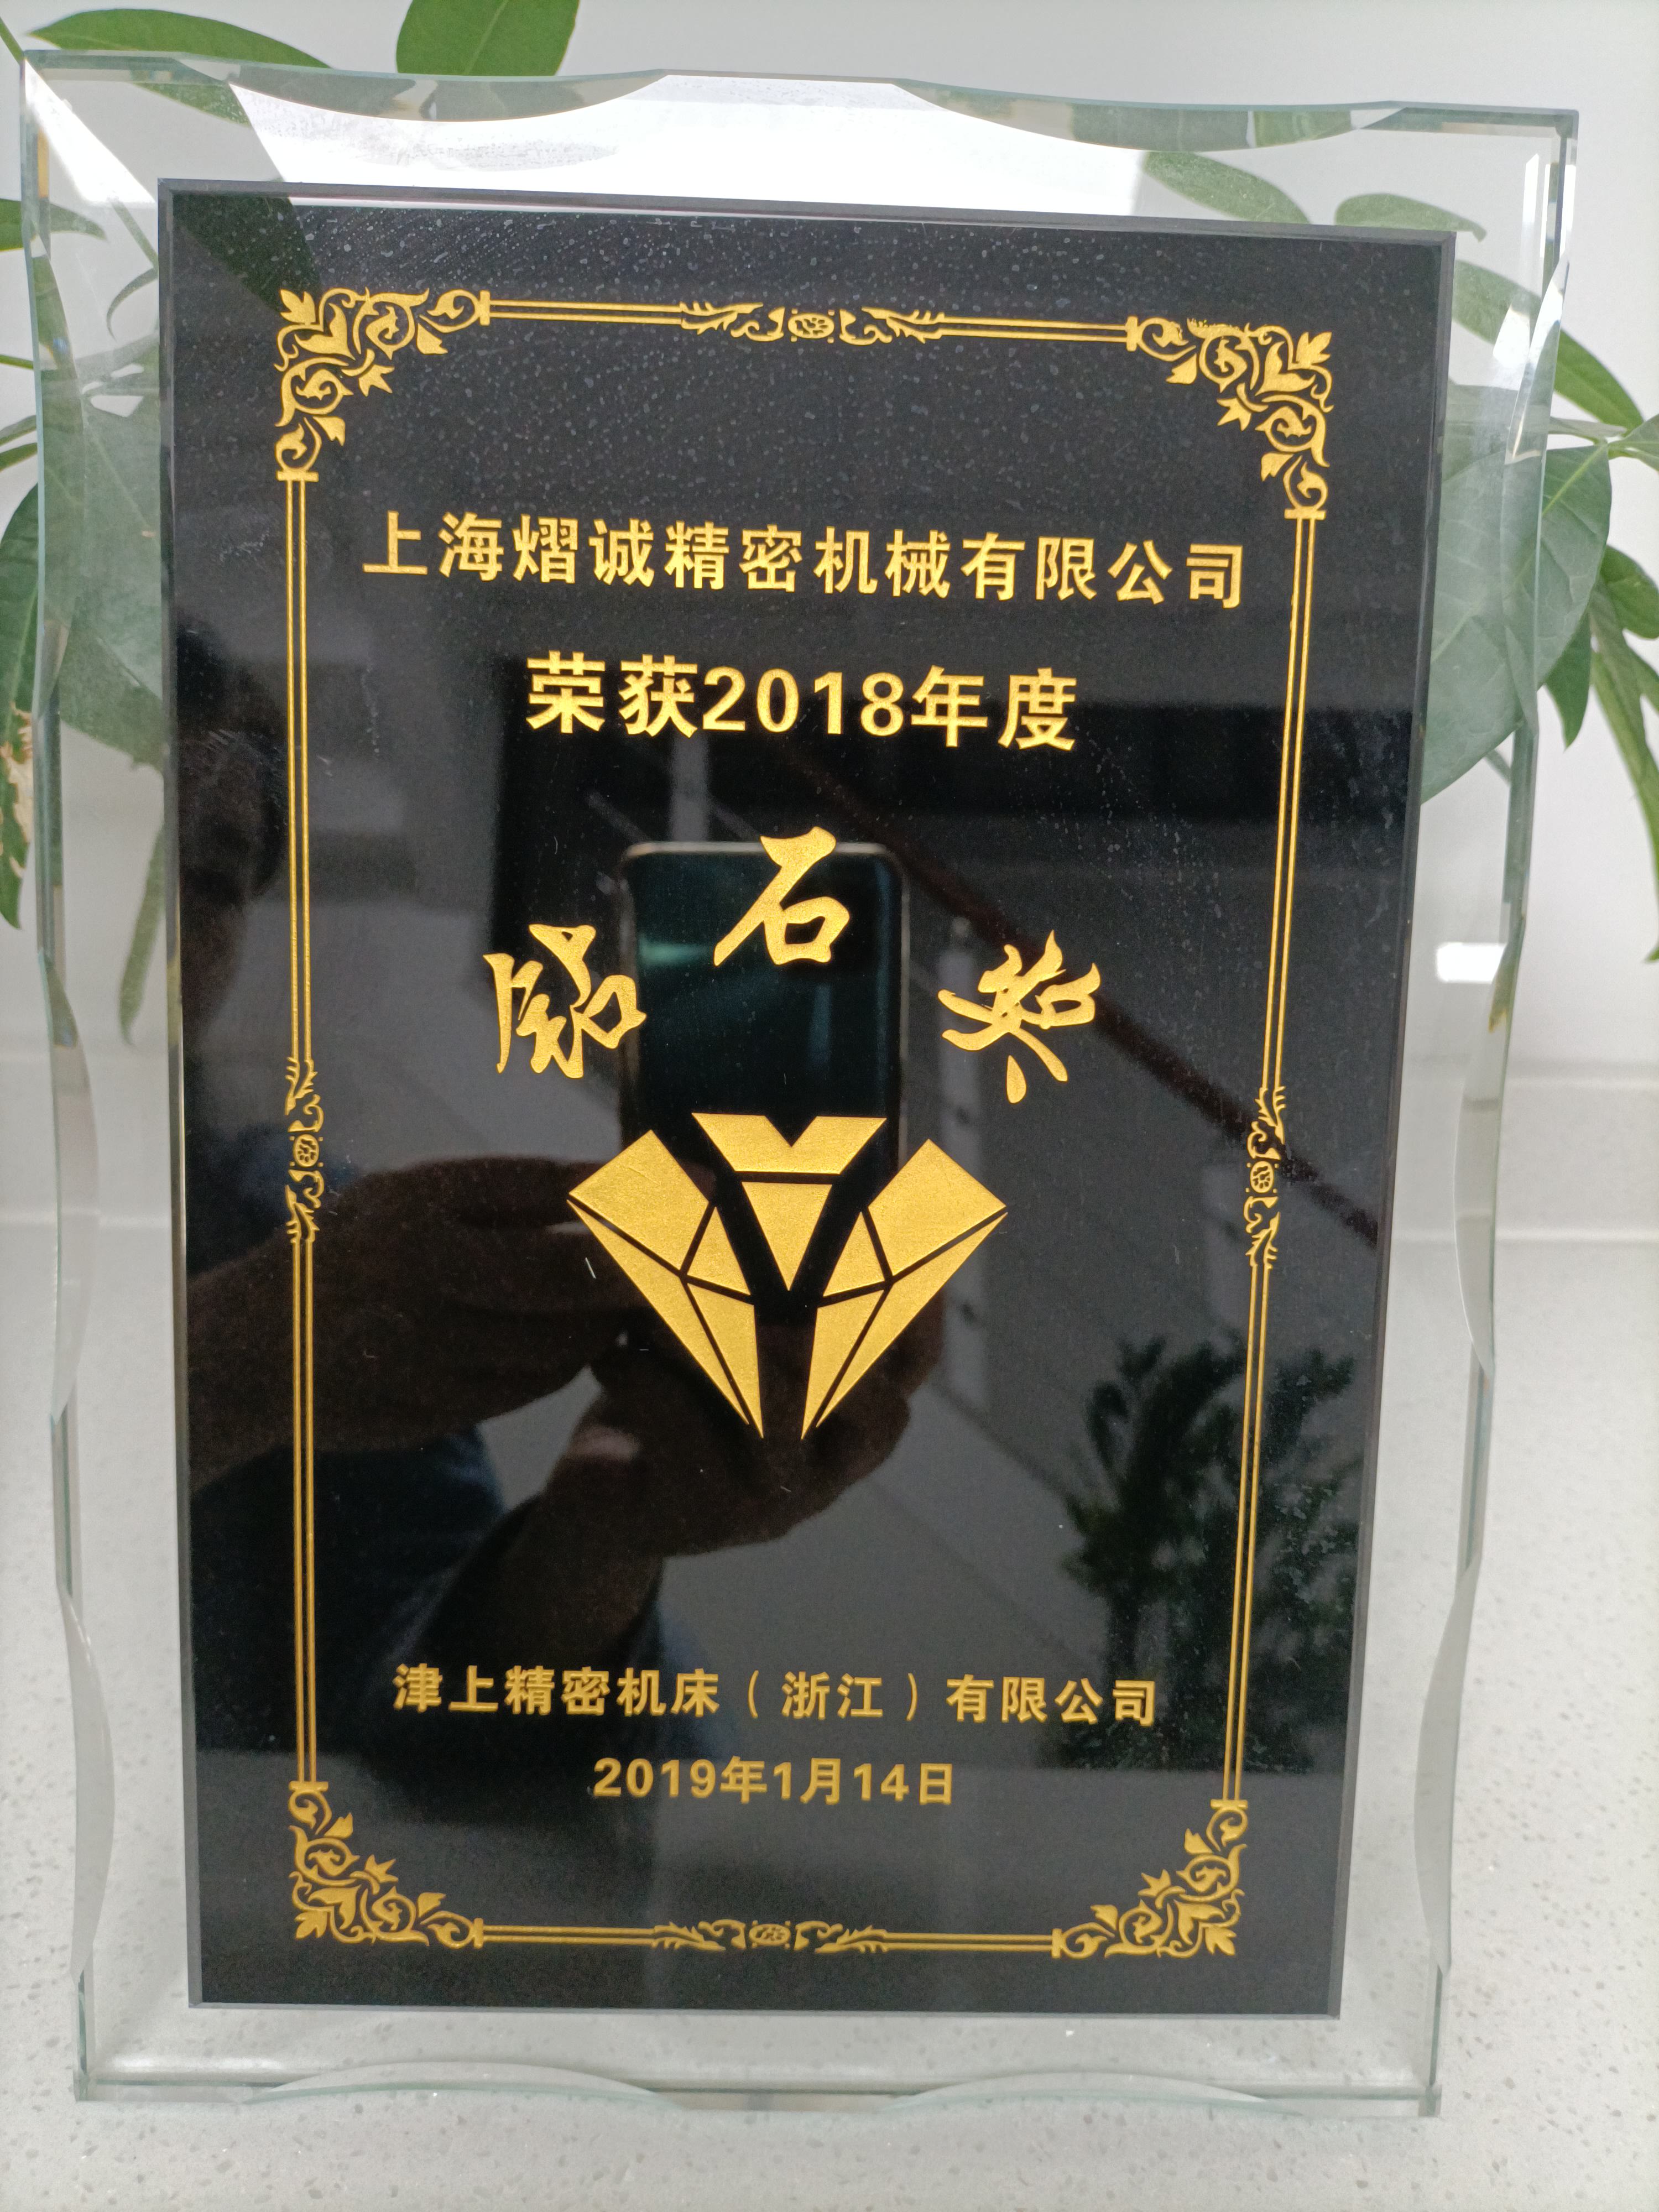 Won the 2018 Diamond Award